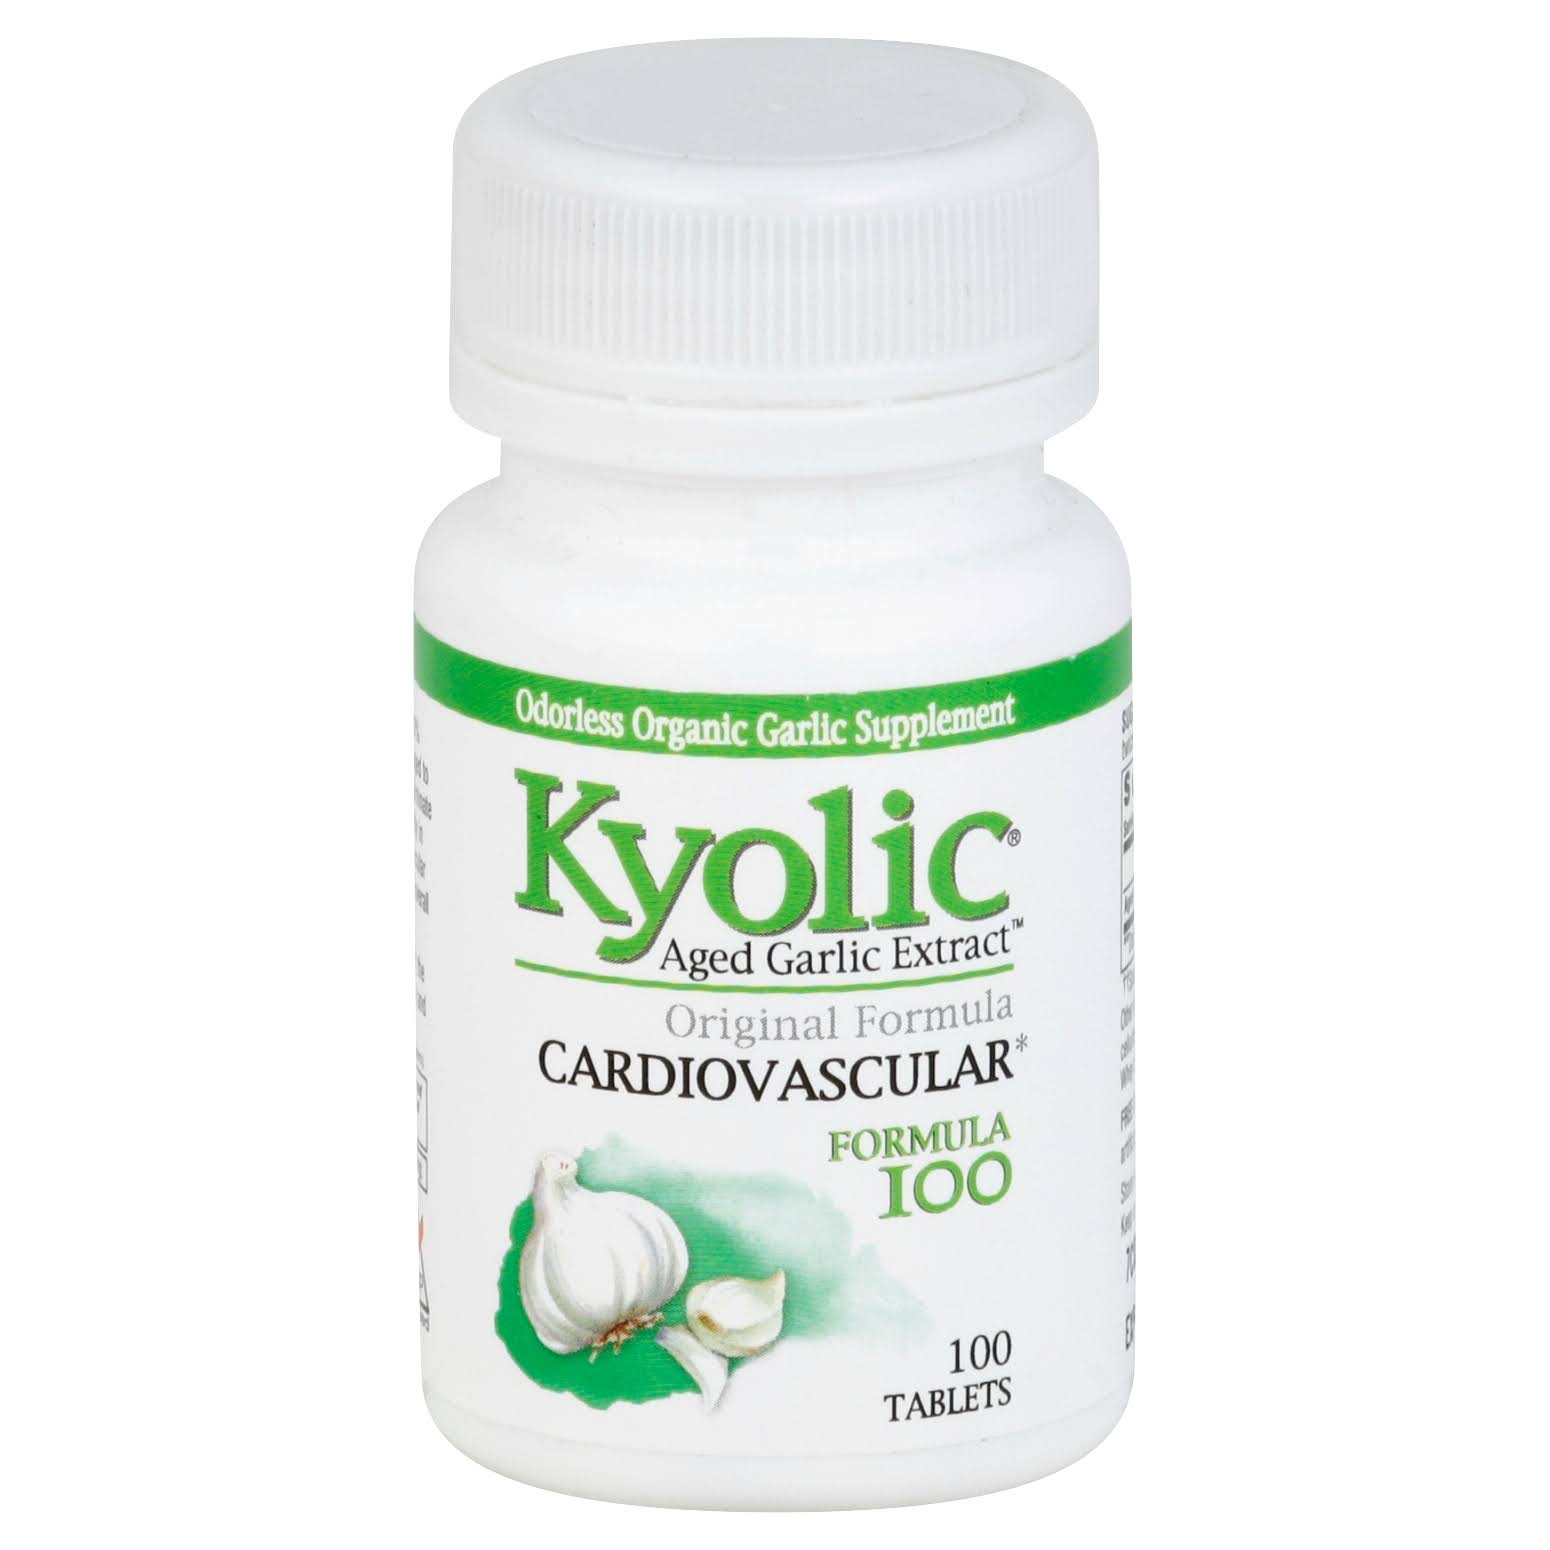 Kyolic0 Original Cardiovascular Formula - Garlic Extract, 100 Tablets